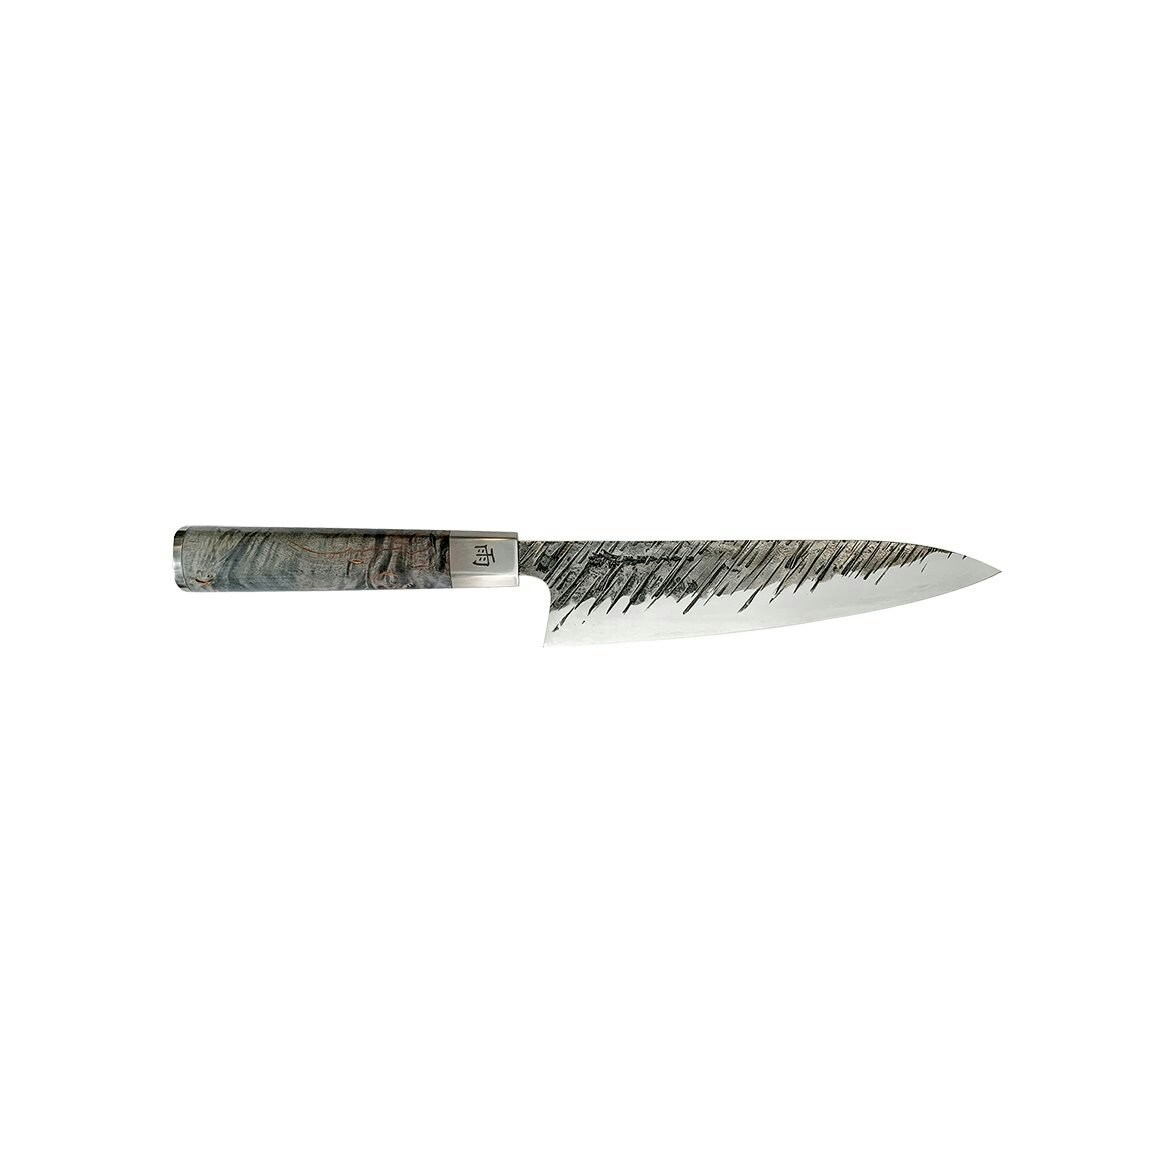 https://royaldesign.com/image/2/satake-ame-gyuto-chef-knife-21-cm-0